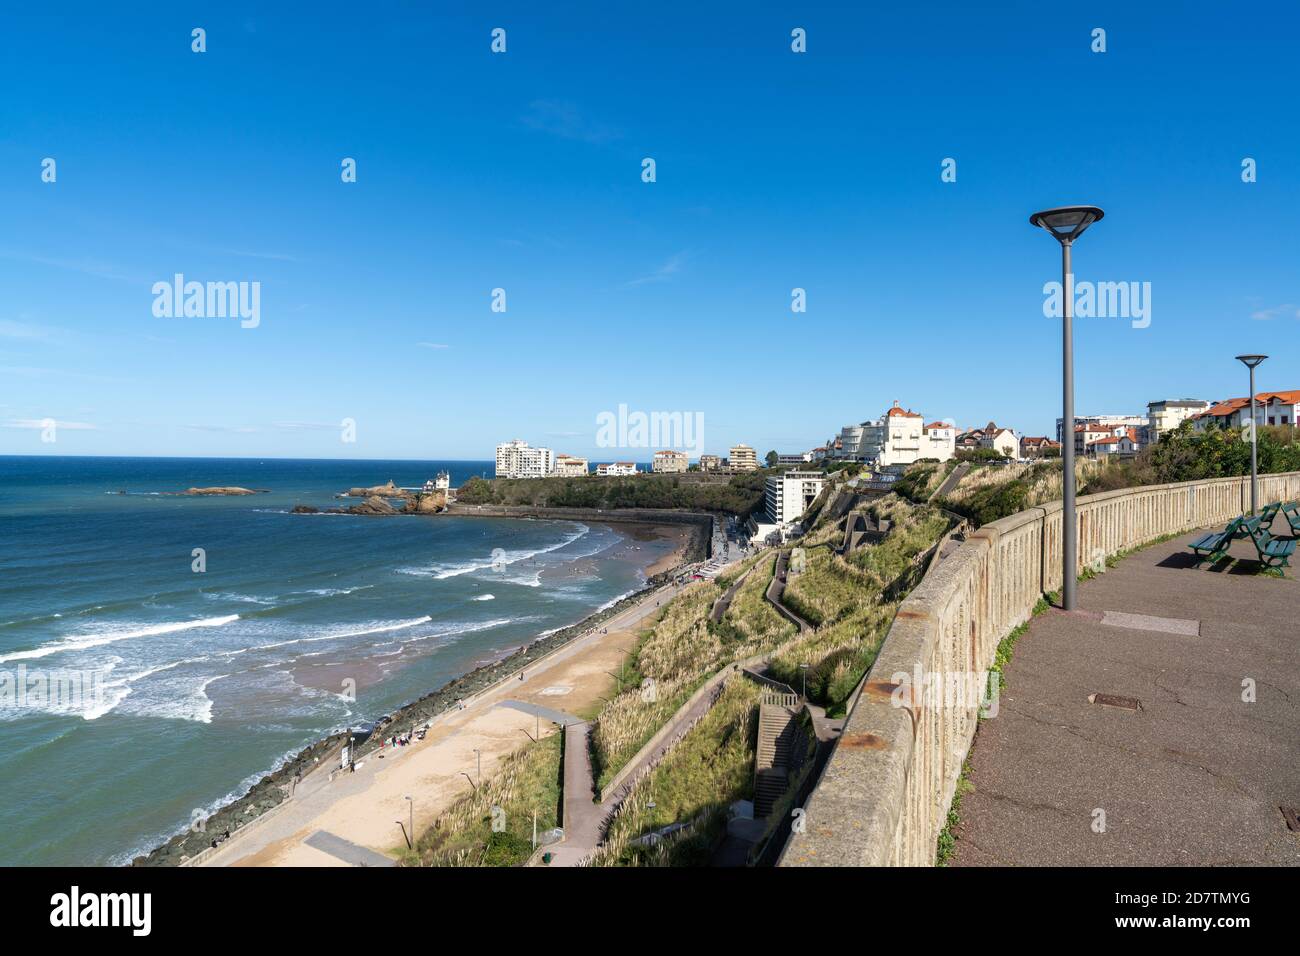 A view of the Plage de la Cote Basque Beach in Biarritz Stock Photo - Alamy